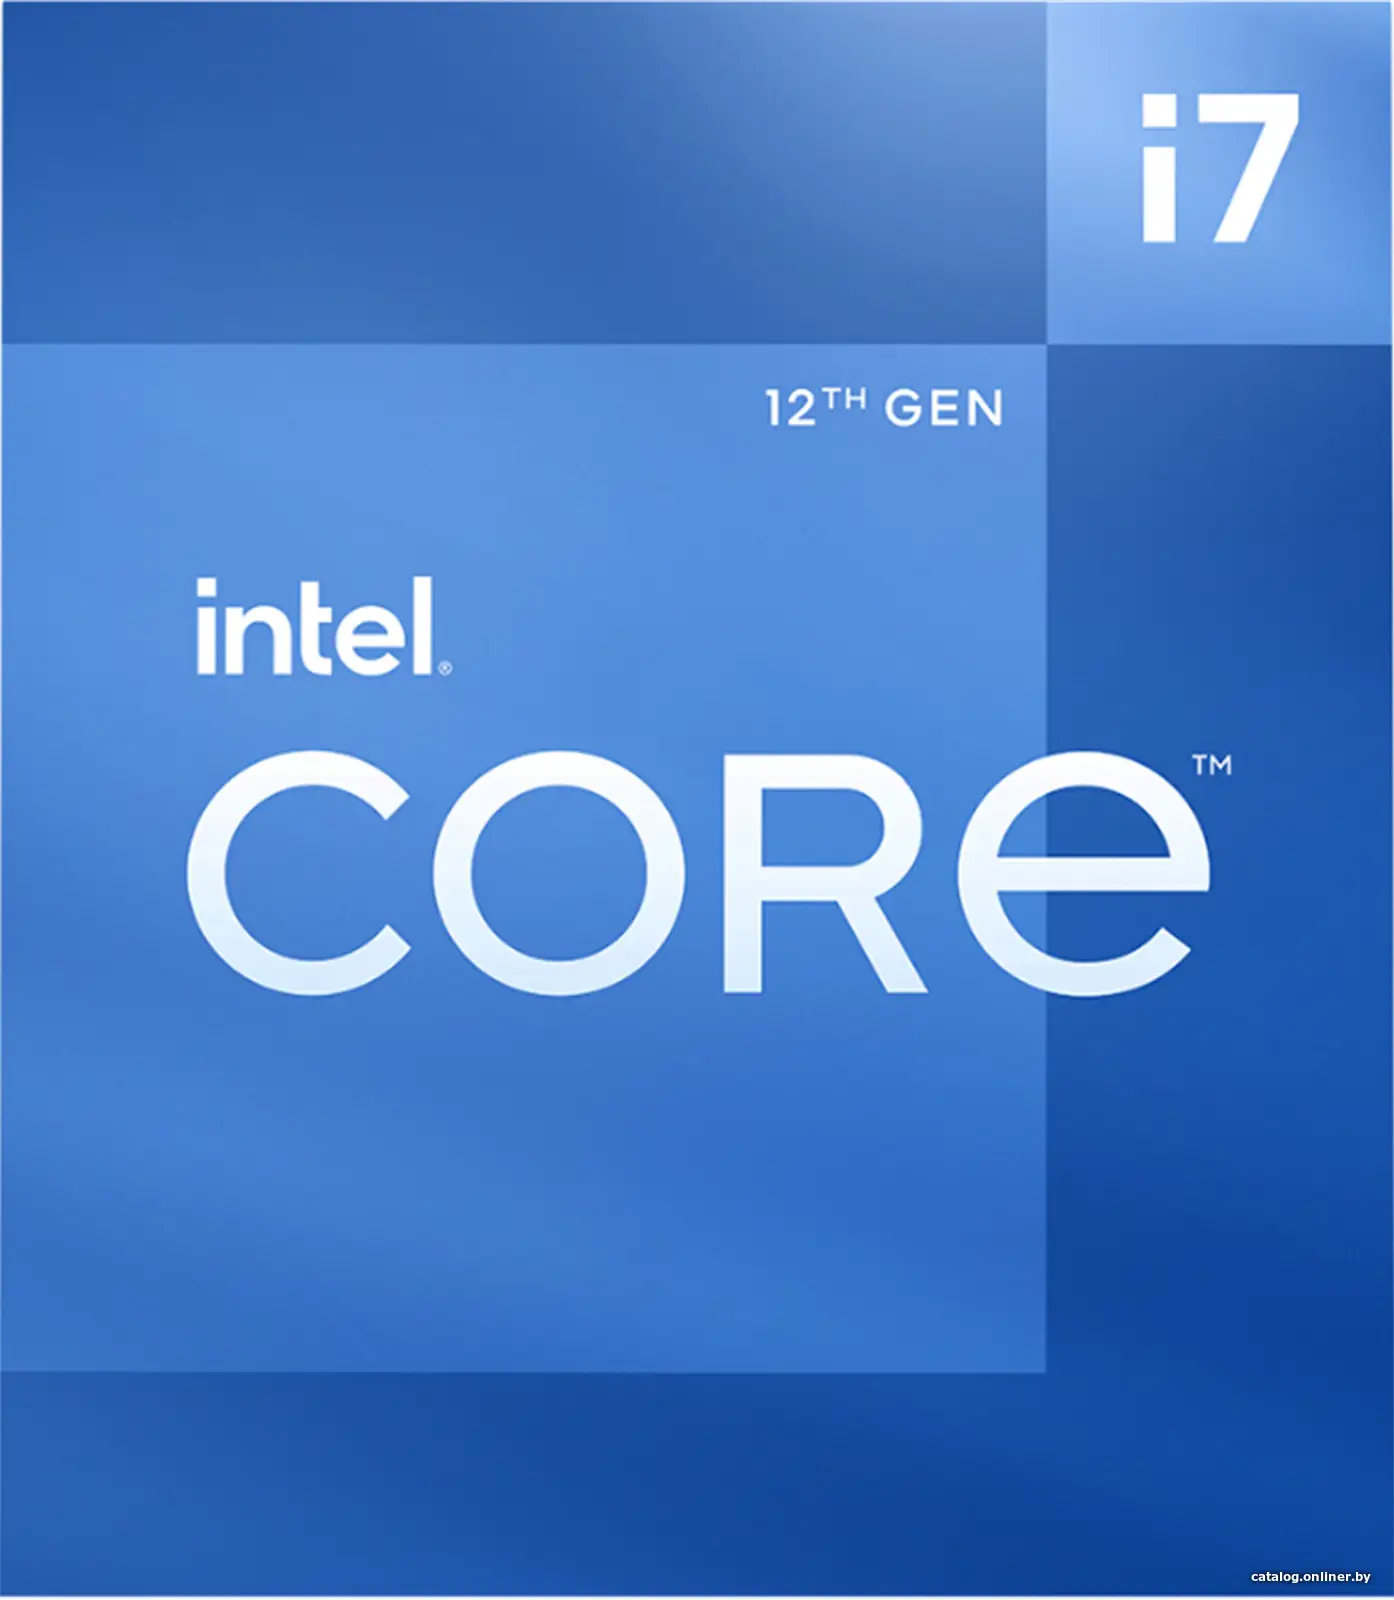 Купить Процессор Intel Core i7-12700 OEM, цена, опт и розница